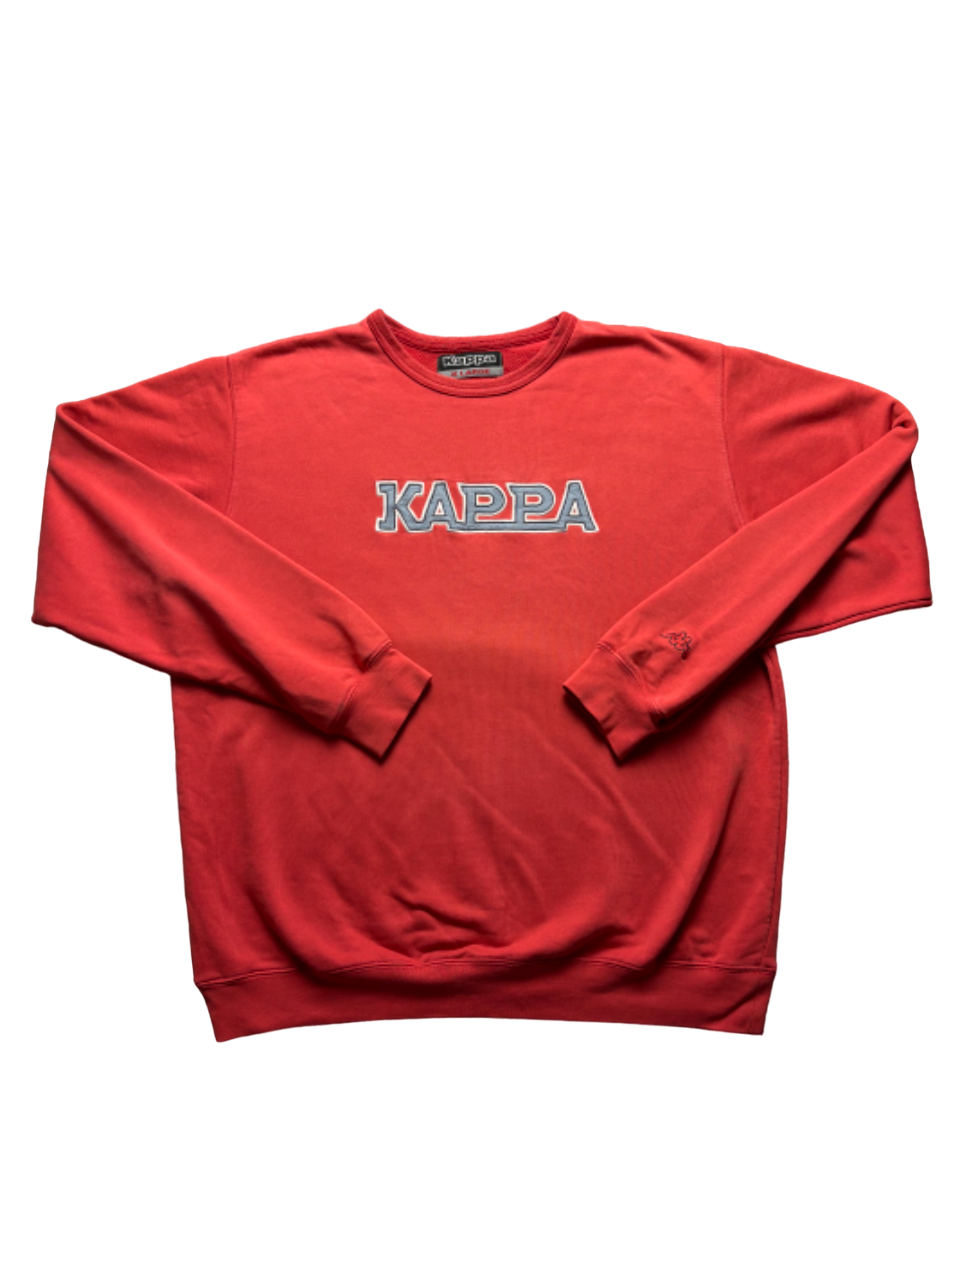 Sudadera retro Kappa logo bordado 00s - XL